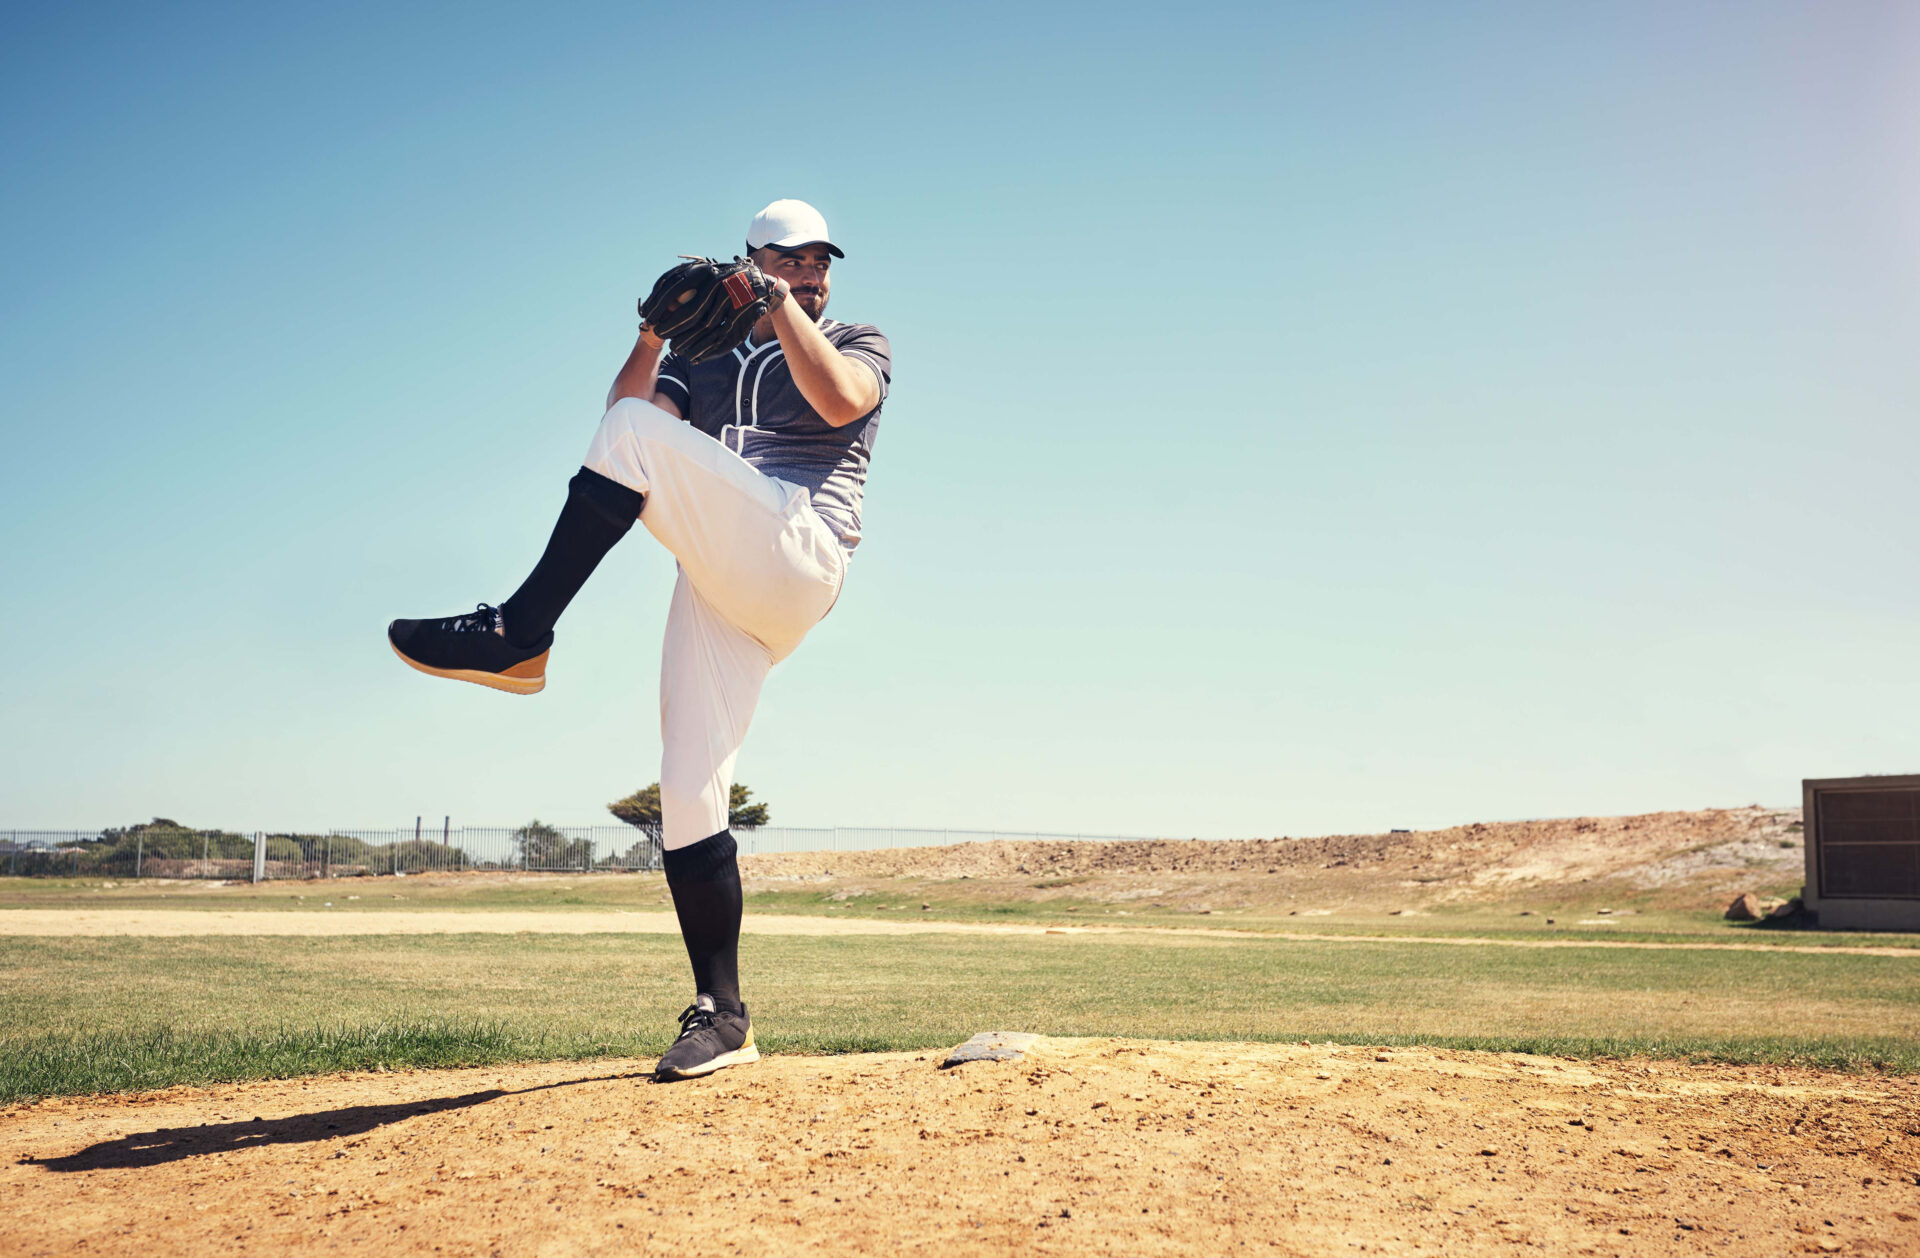 Baseball pitcher throwing baseball. Pitcher injured his rotator cuff, and will undergo a rotator cuff arthroscopy surgery. 